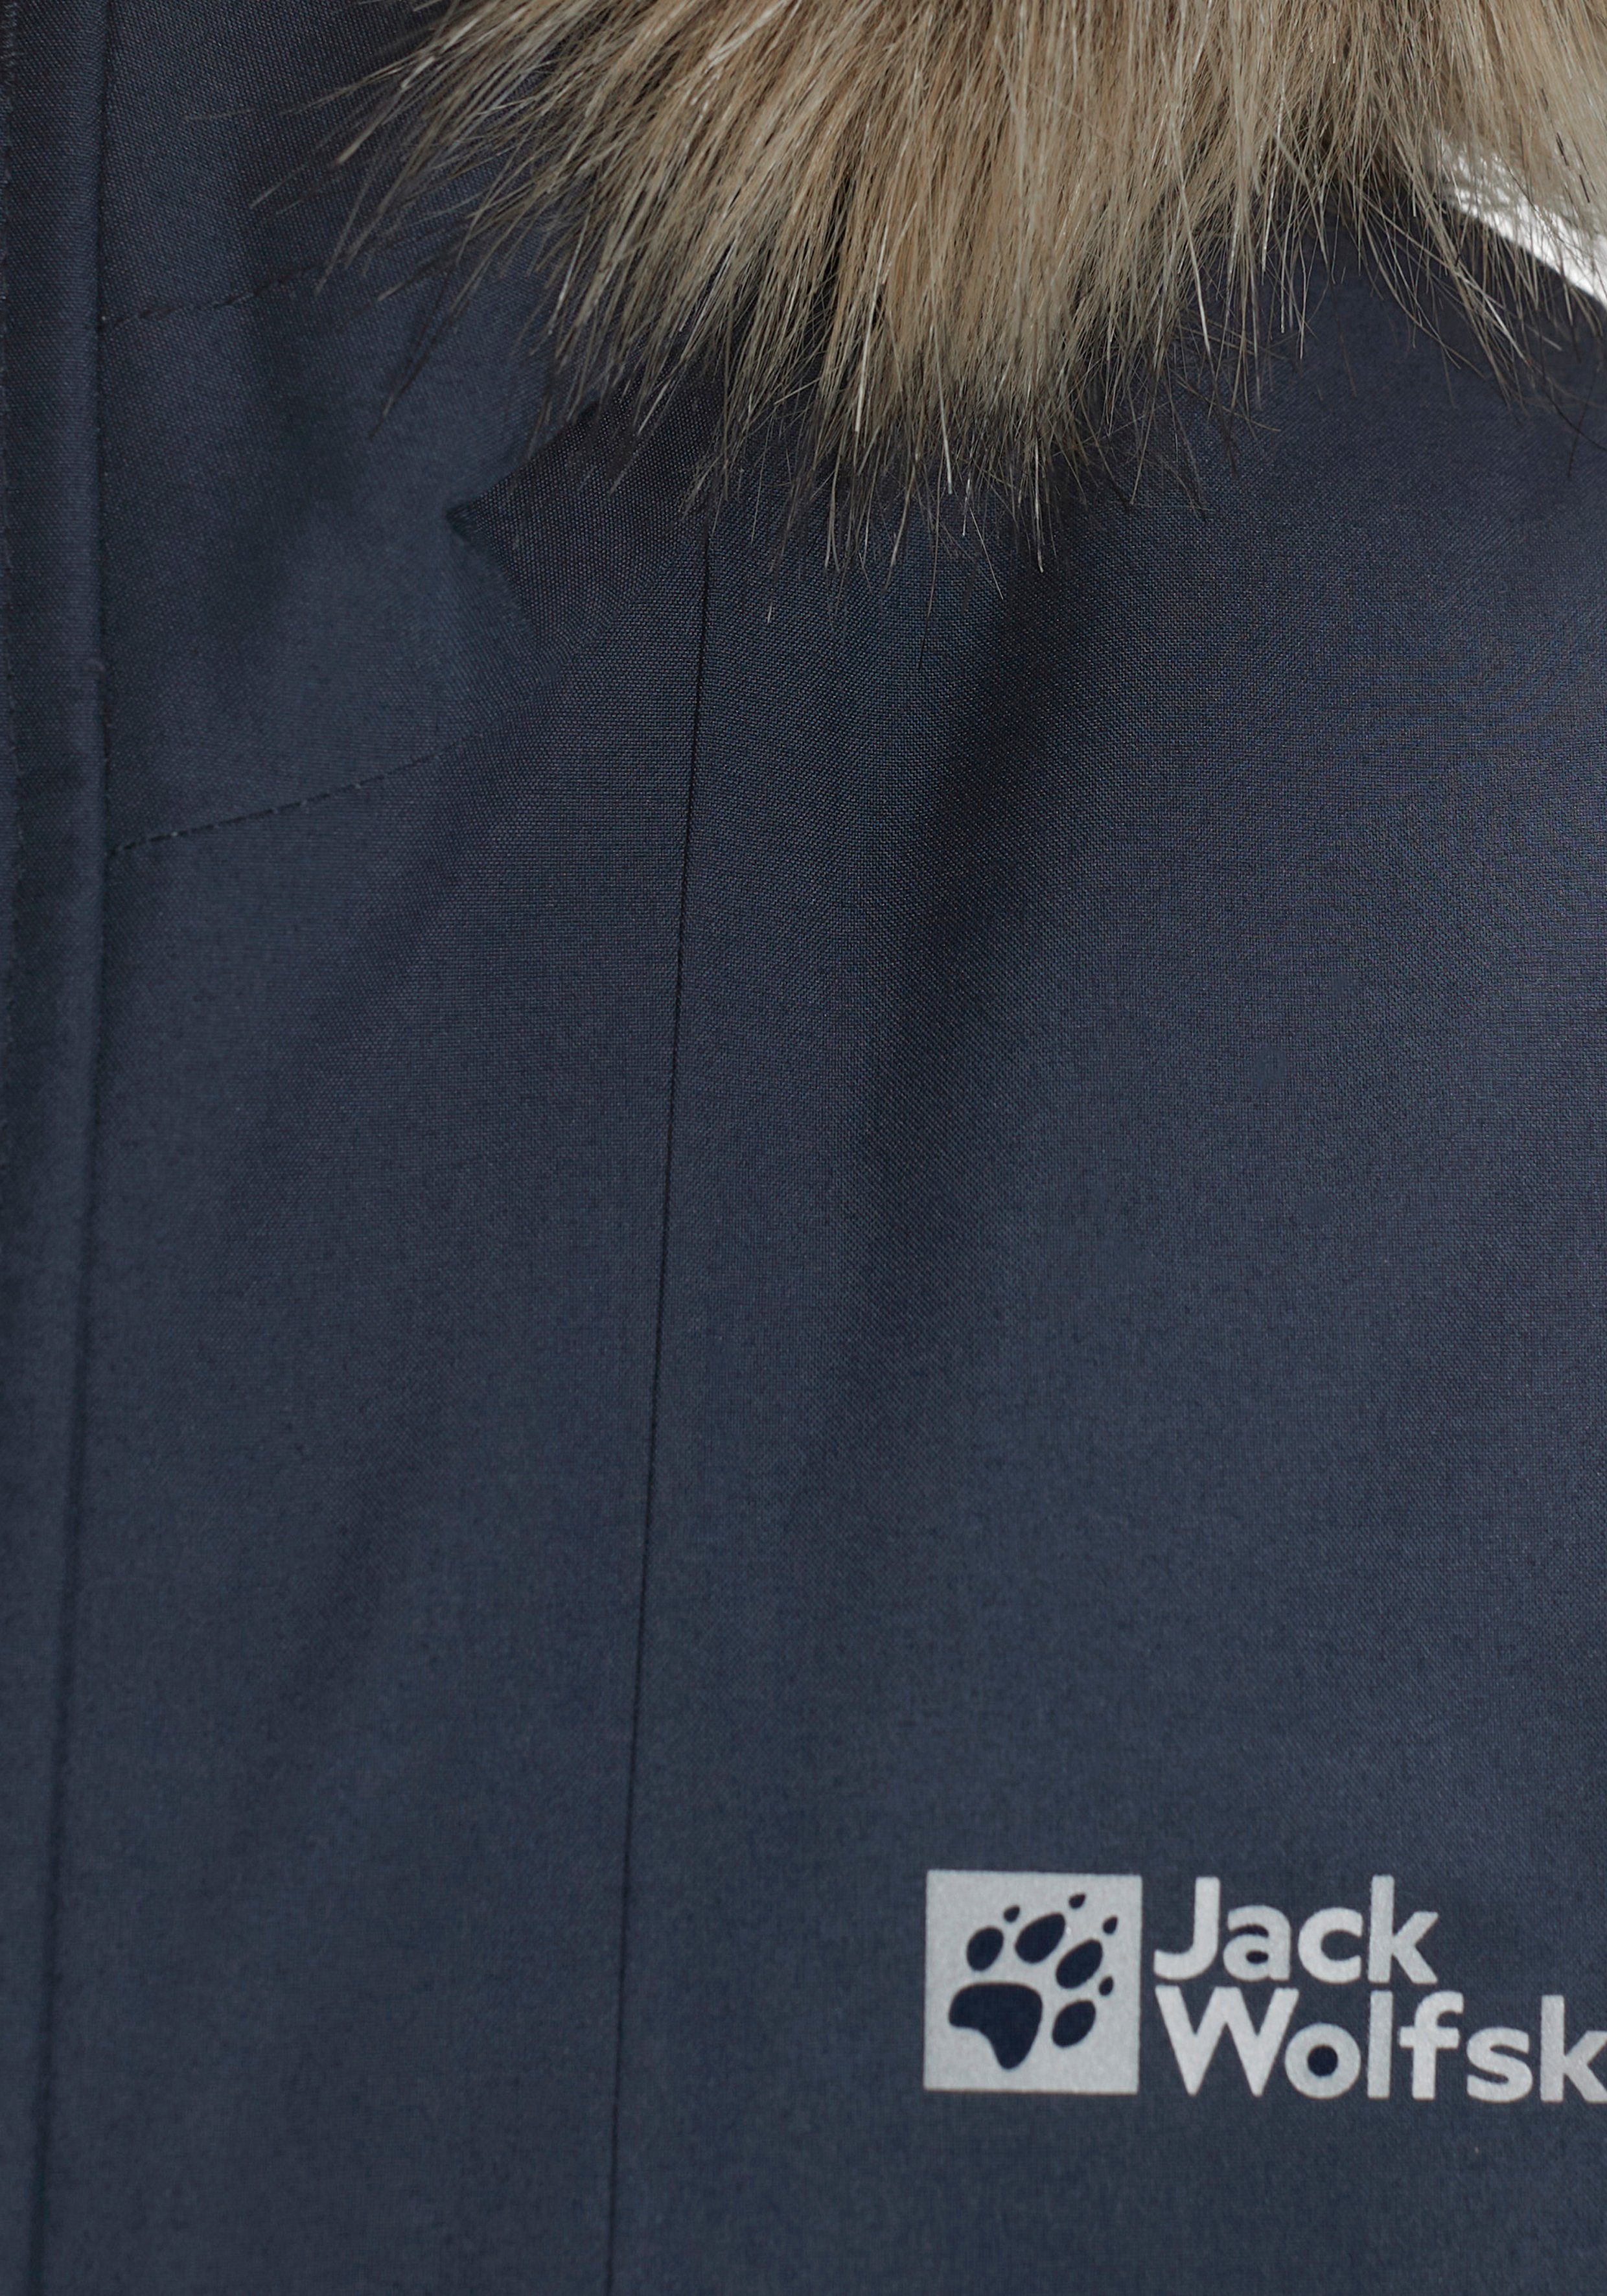 Jack Wolfskin Outdoorjacke COSY K blue klassischen JACKET night Kinderparka Design BEAR isolierender langer, im